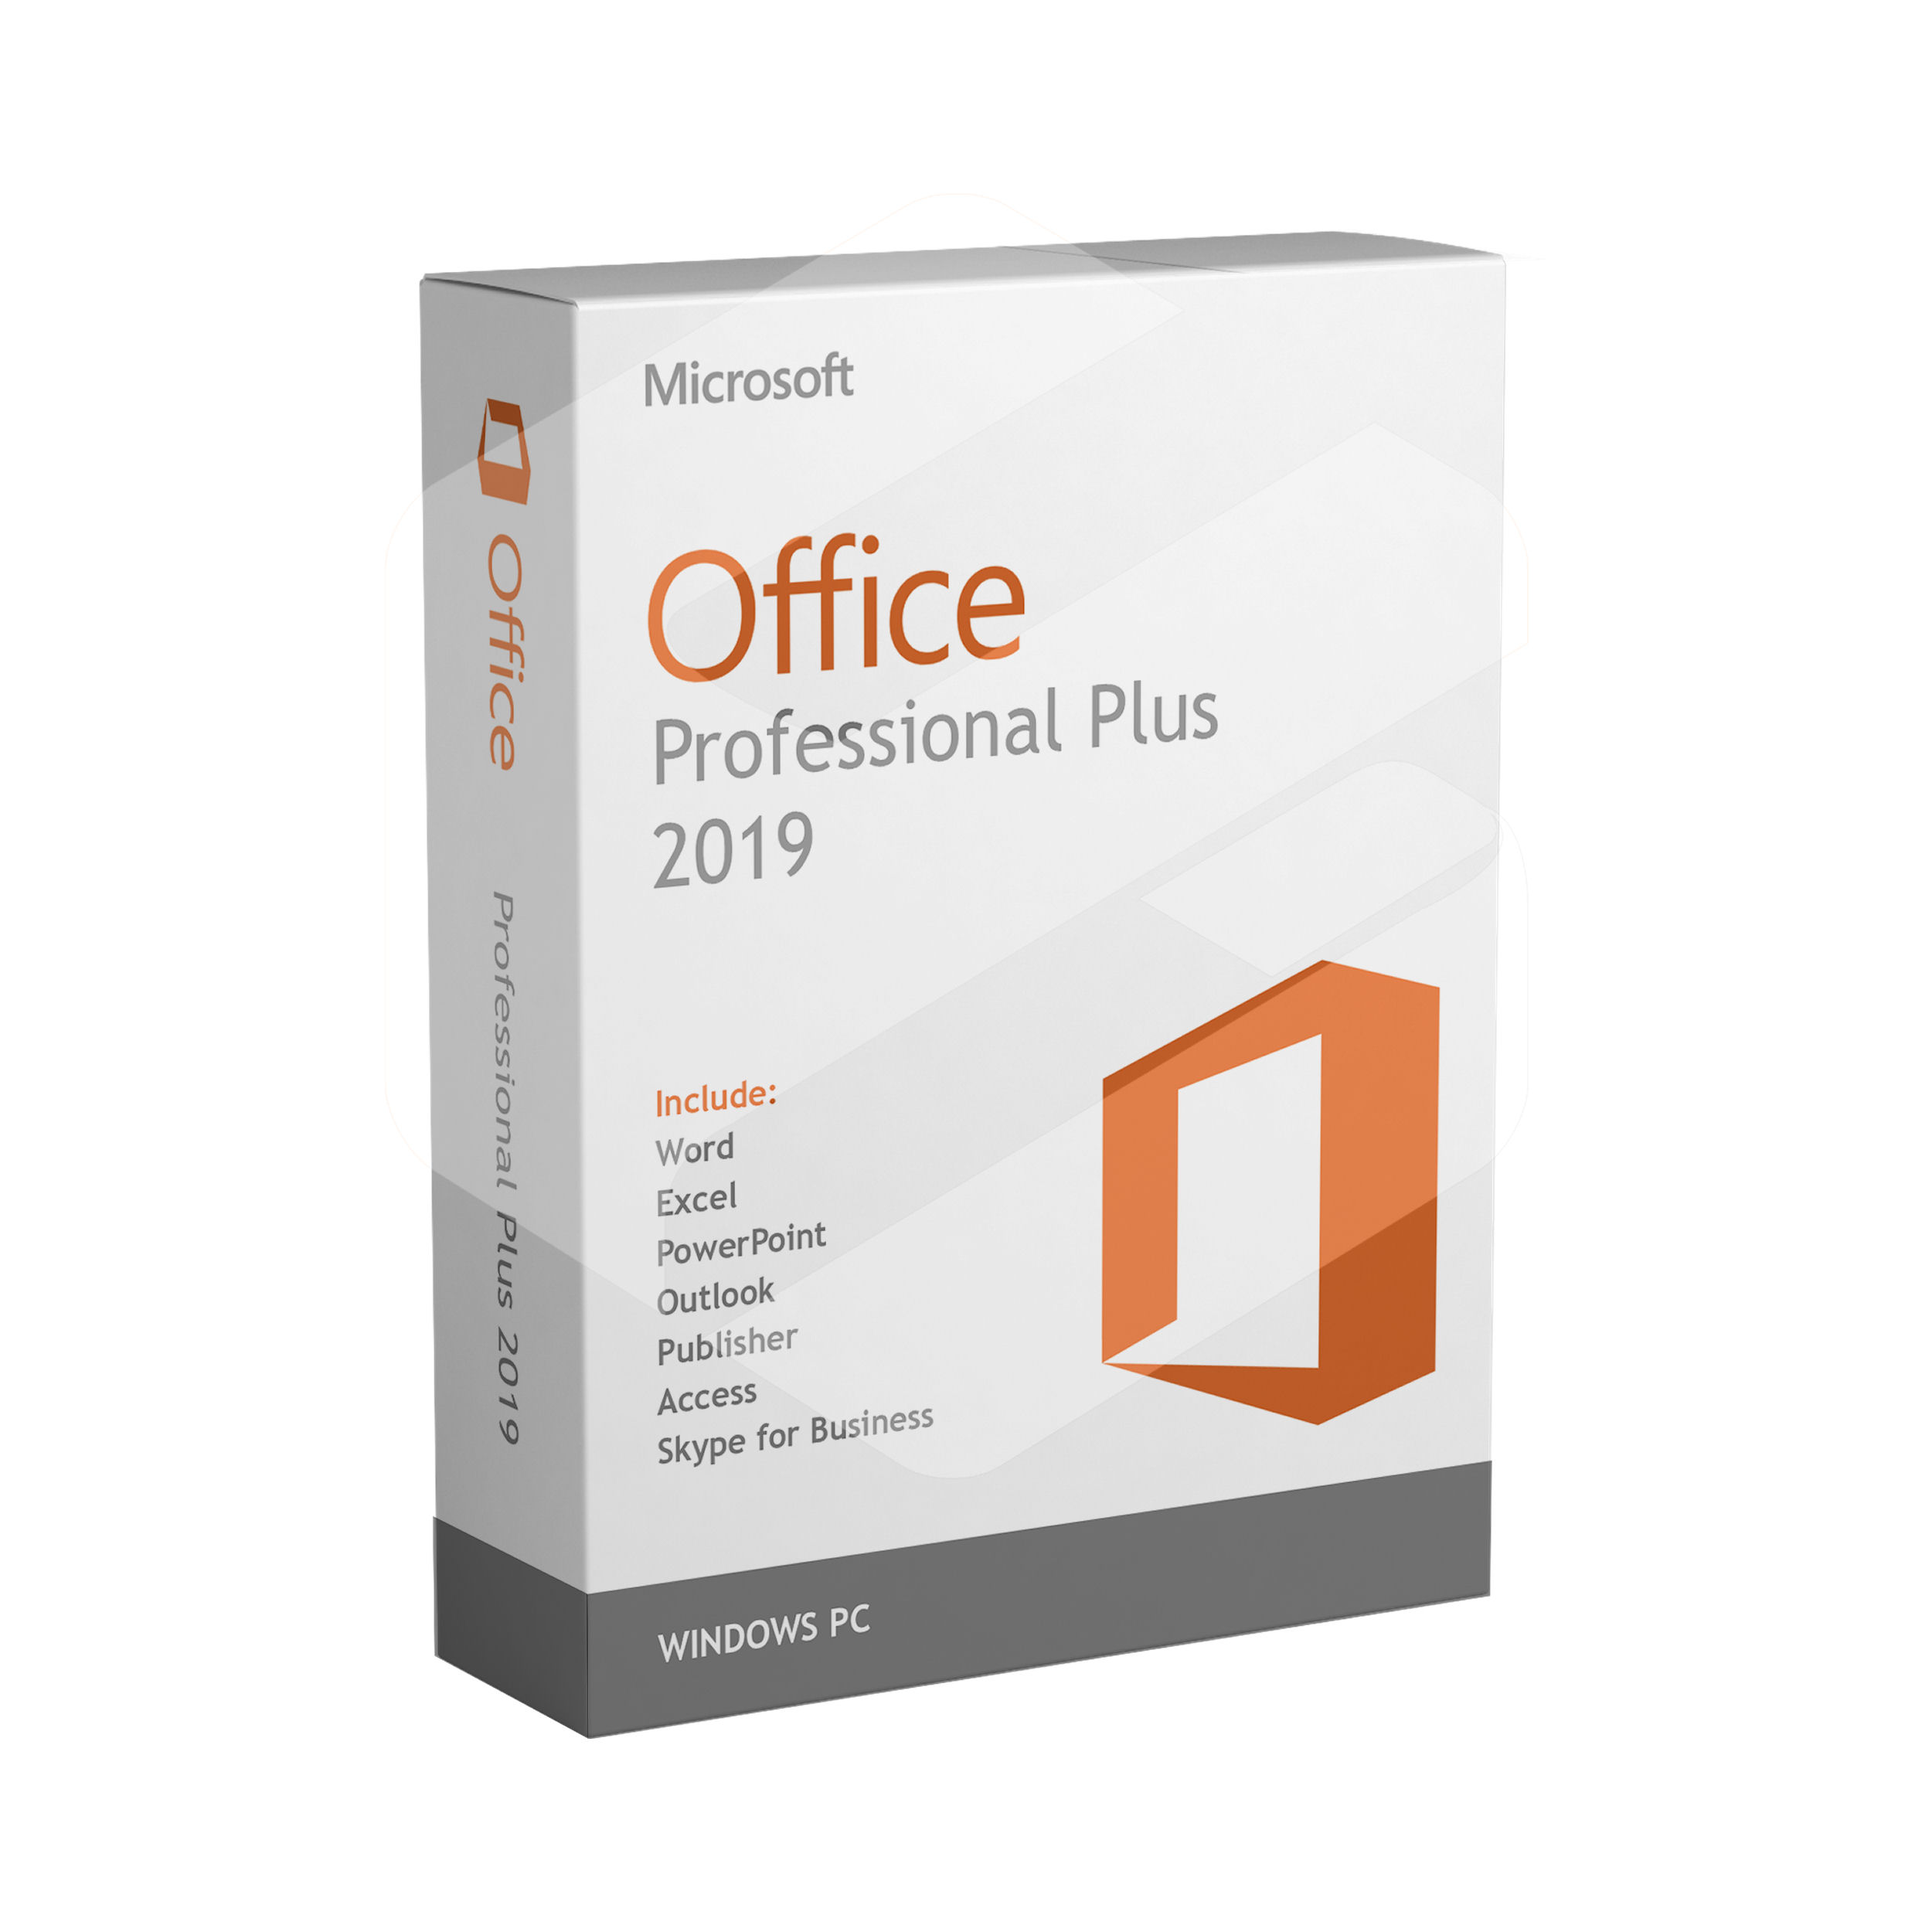 Microsoft Office 2019 Professional plus 32bit 64bitプロダクトキー正規日本語版ダウンロード版 office2019 再インストール可能オフィス2019